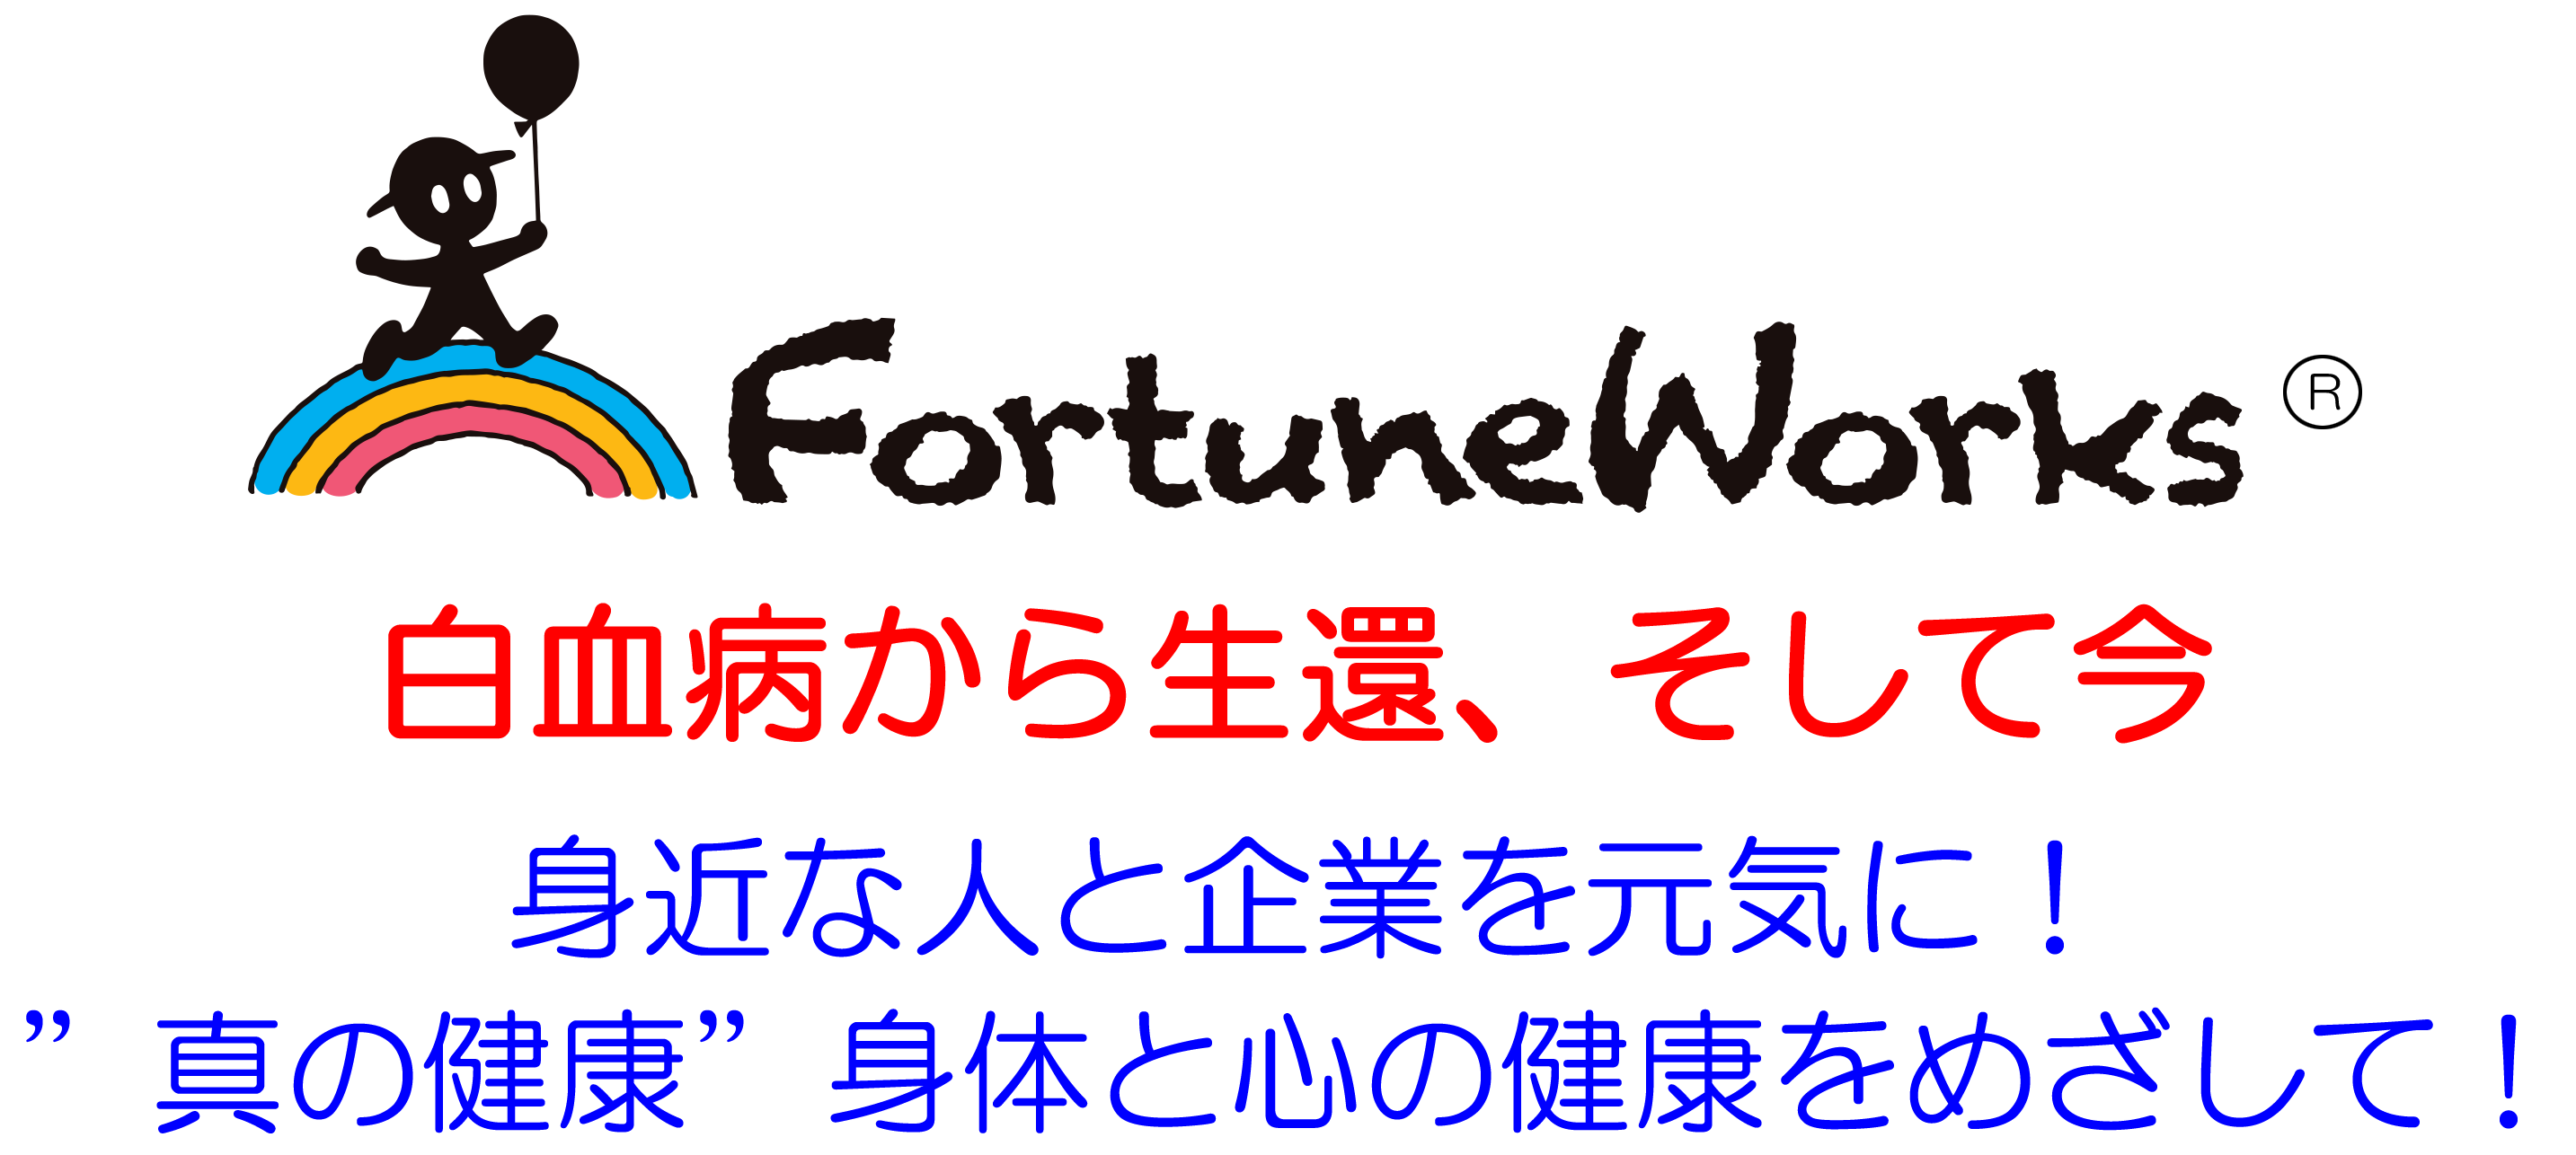 FortuneWorks